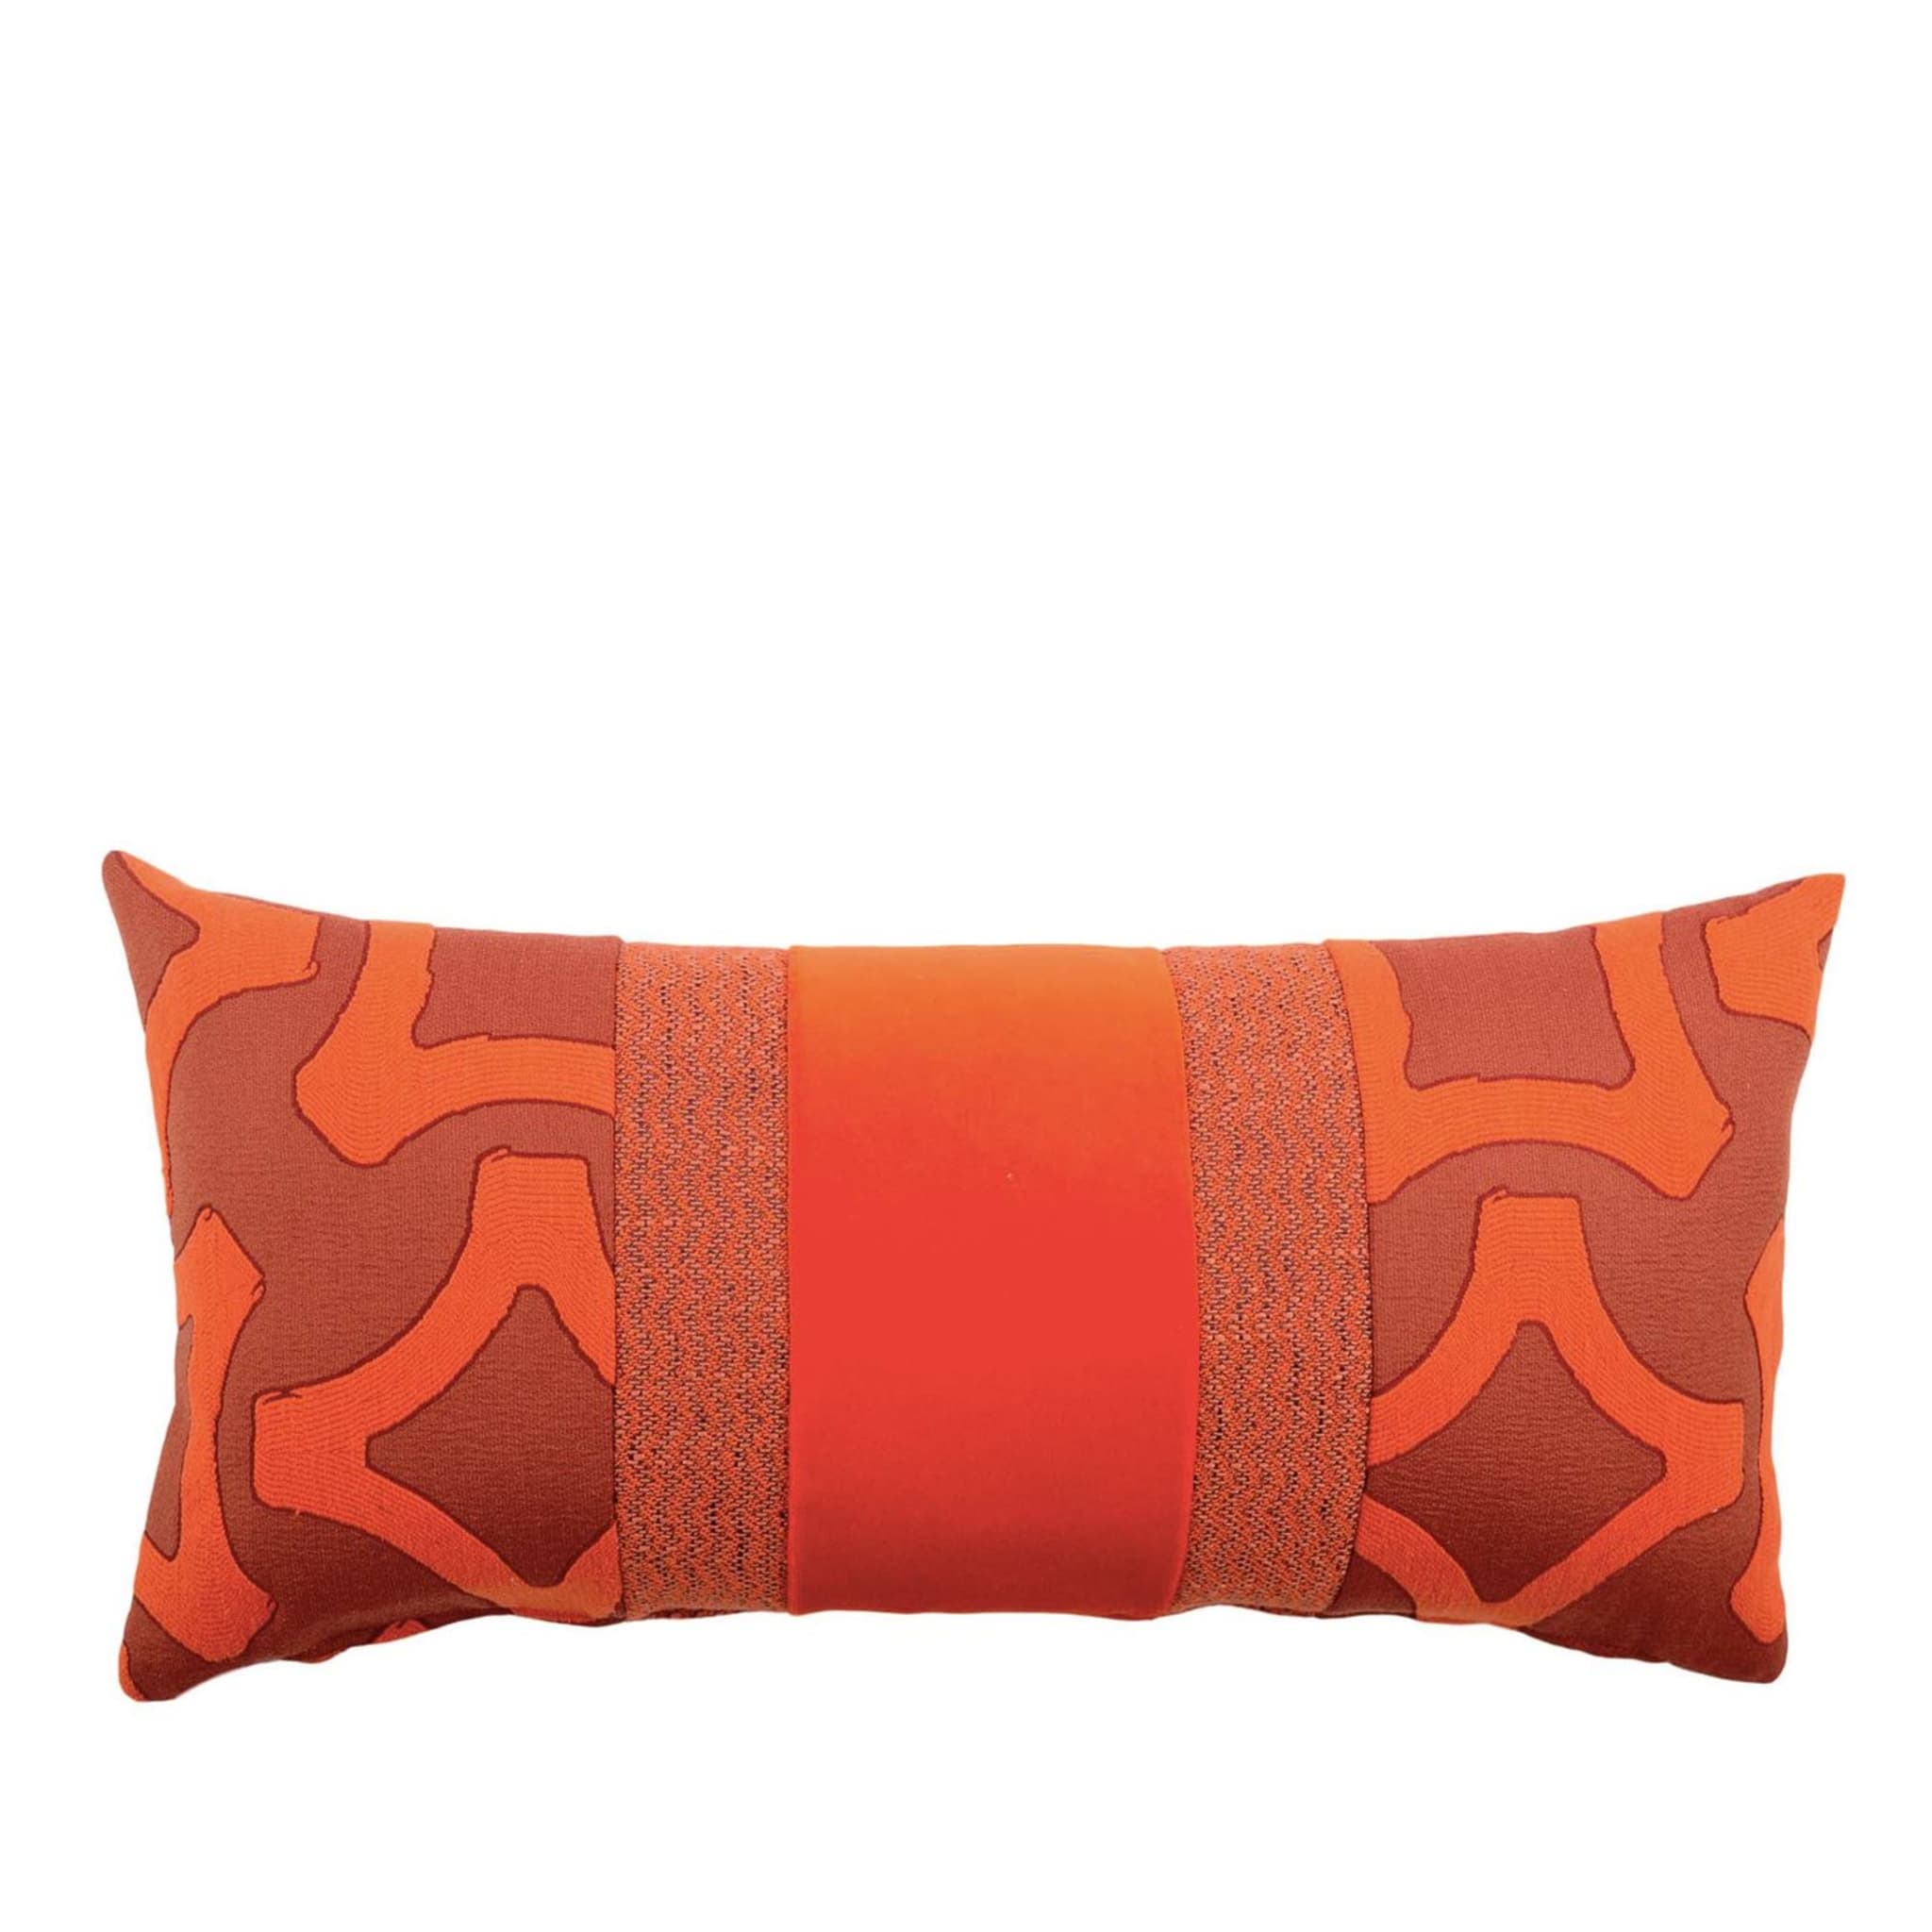 Rectangular Nastro Cushion in jacquard fabric and orange cotton velvet - Main view